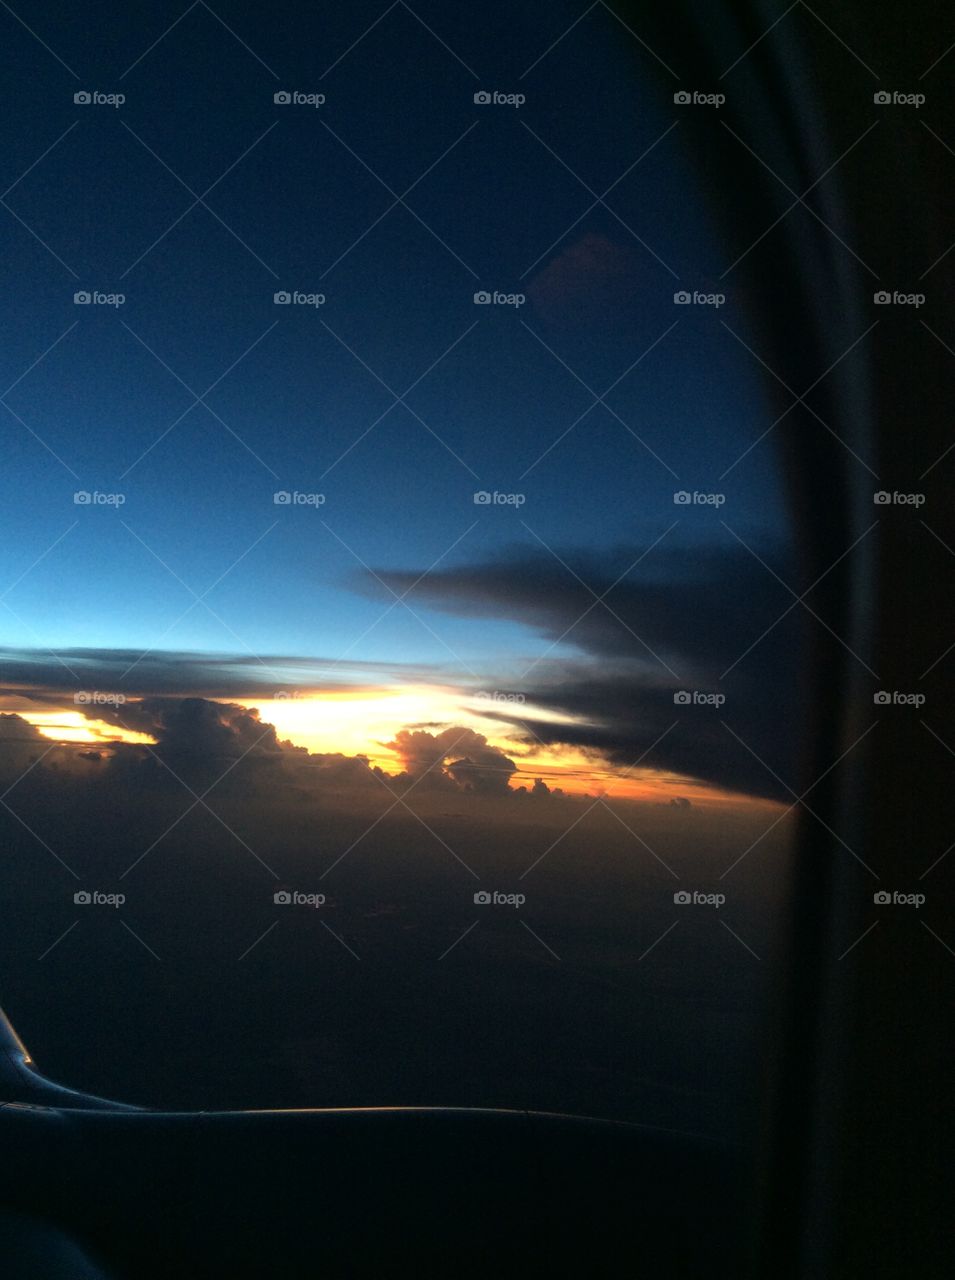 Sunset on the plane